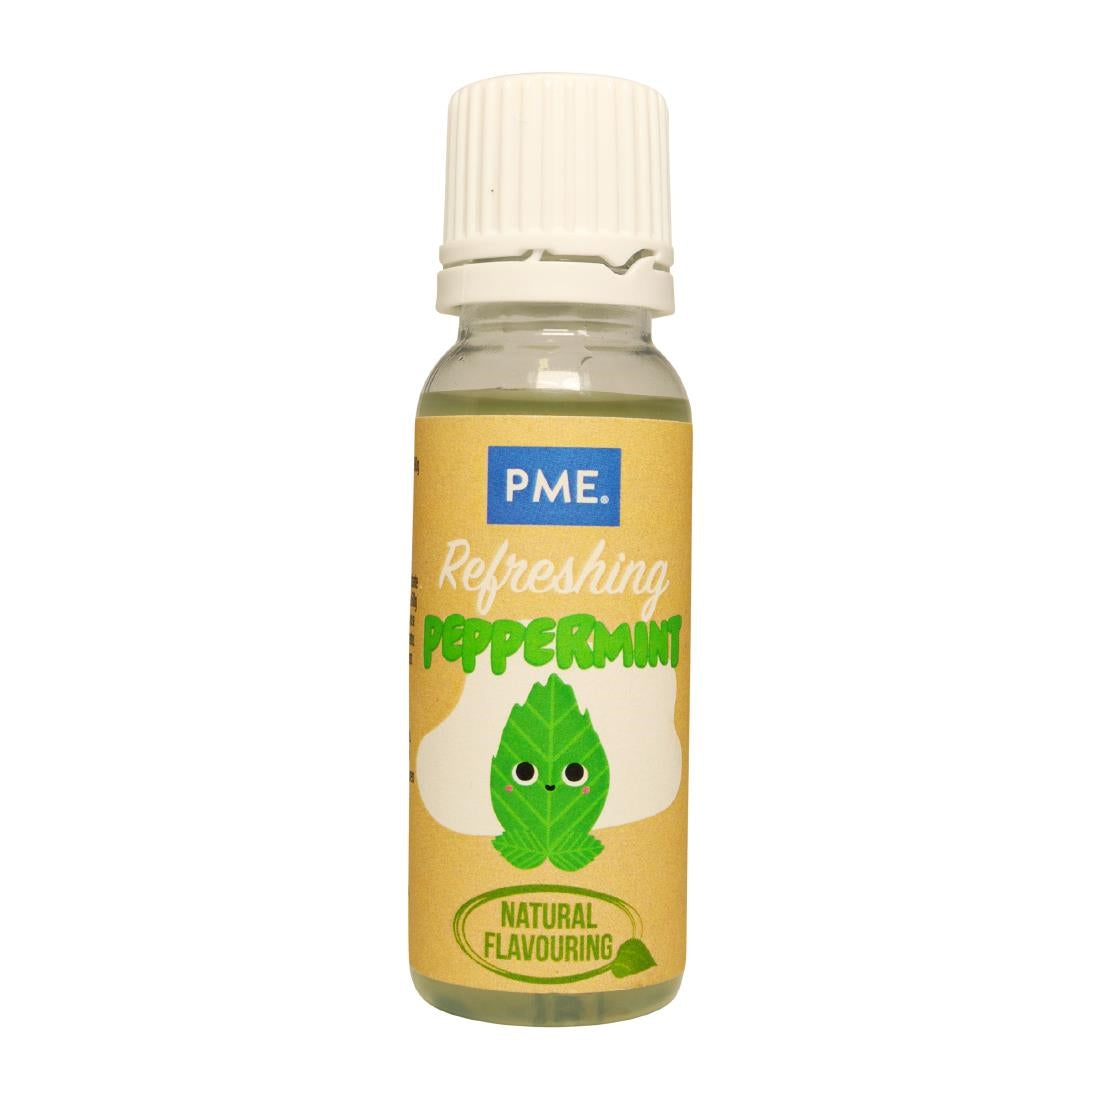 HU248 PME 100% Natural Flavour Peppermint 25g